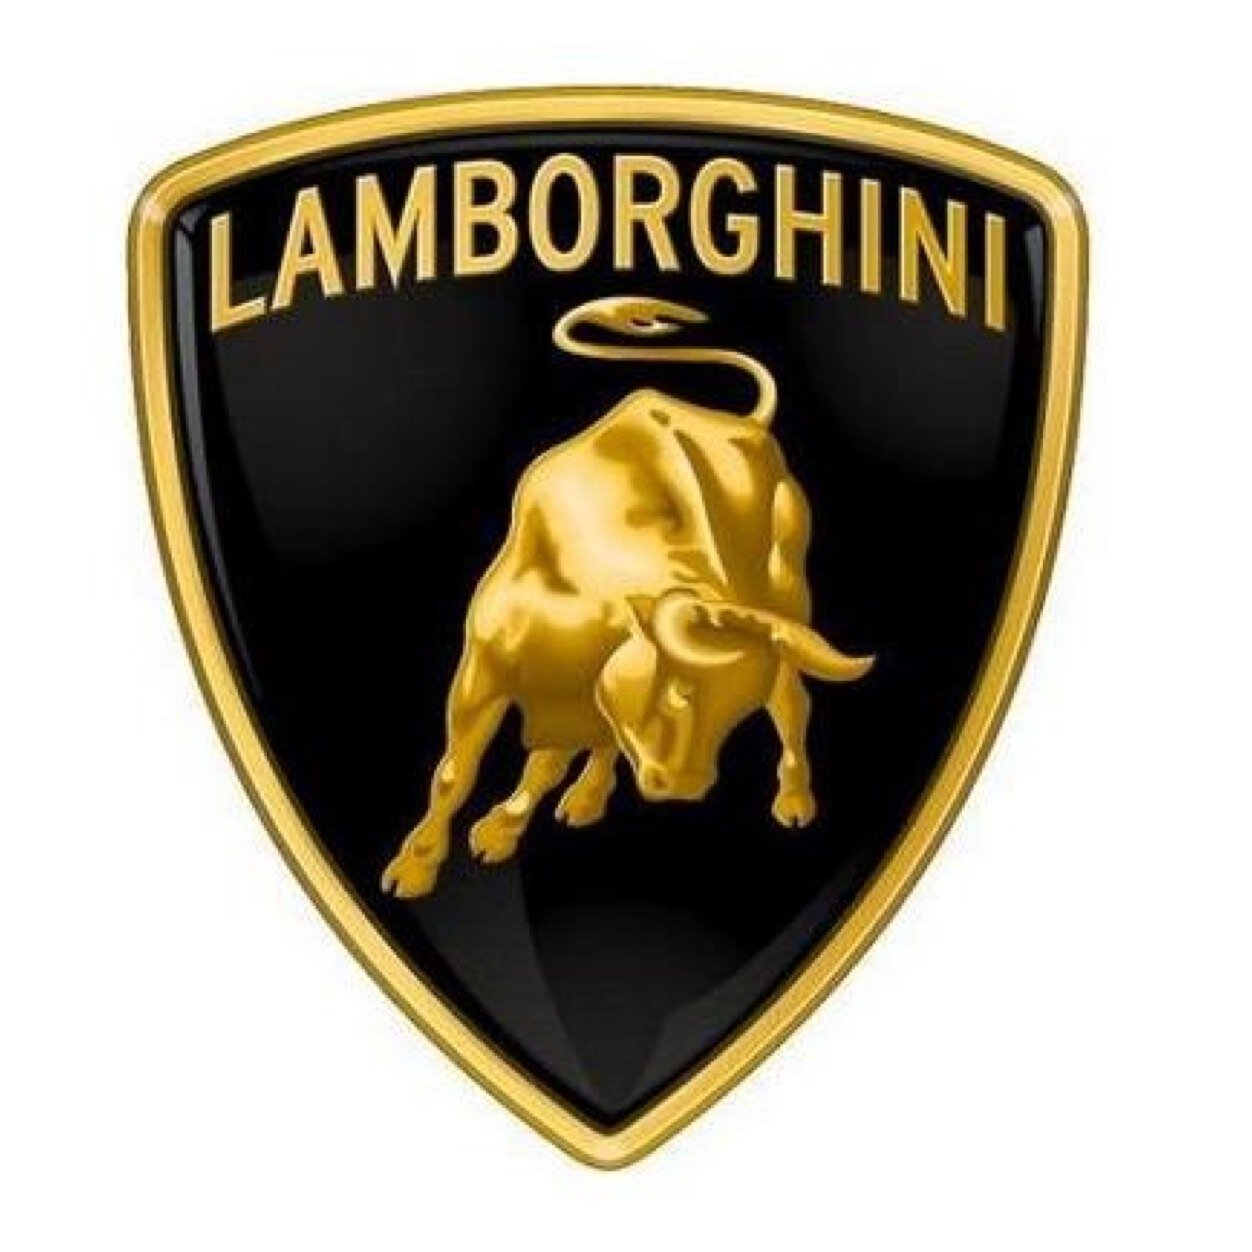 Authorized dealer of Lamborghini in Western Canada. Opening in 2015.